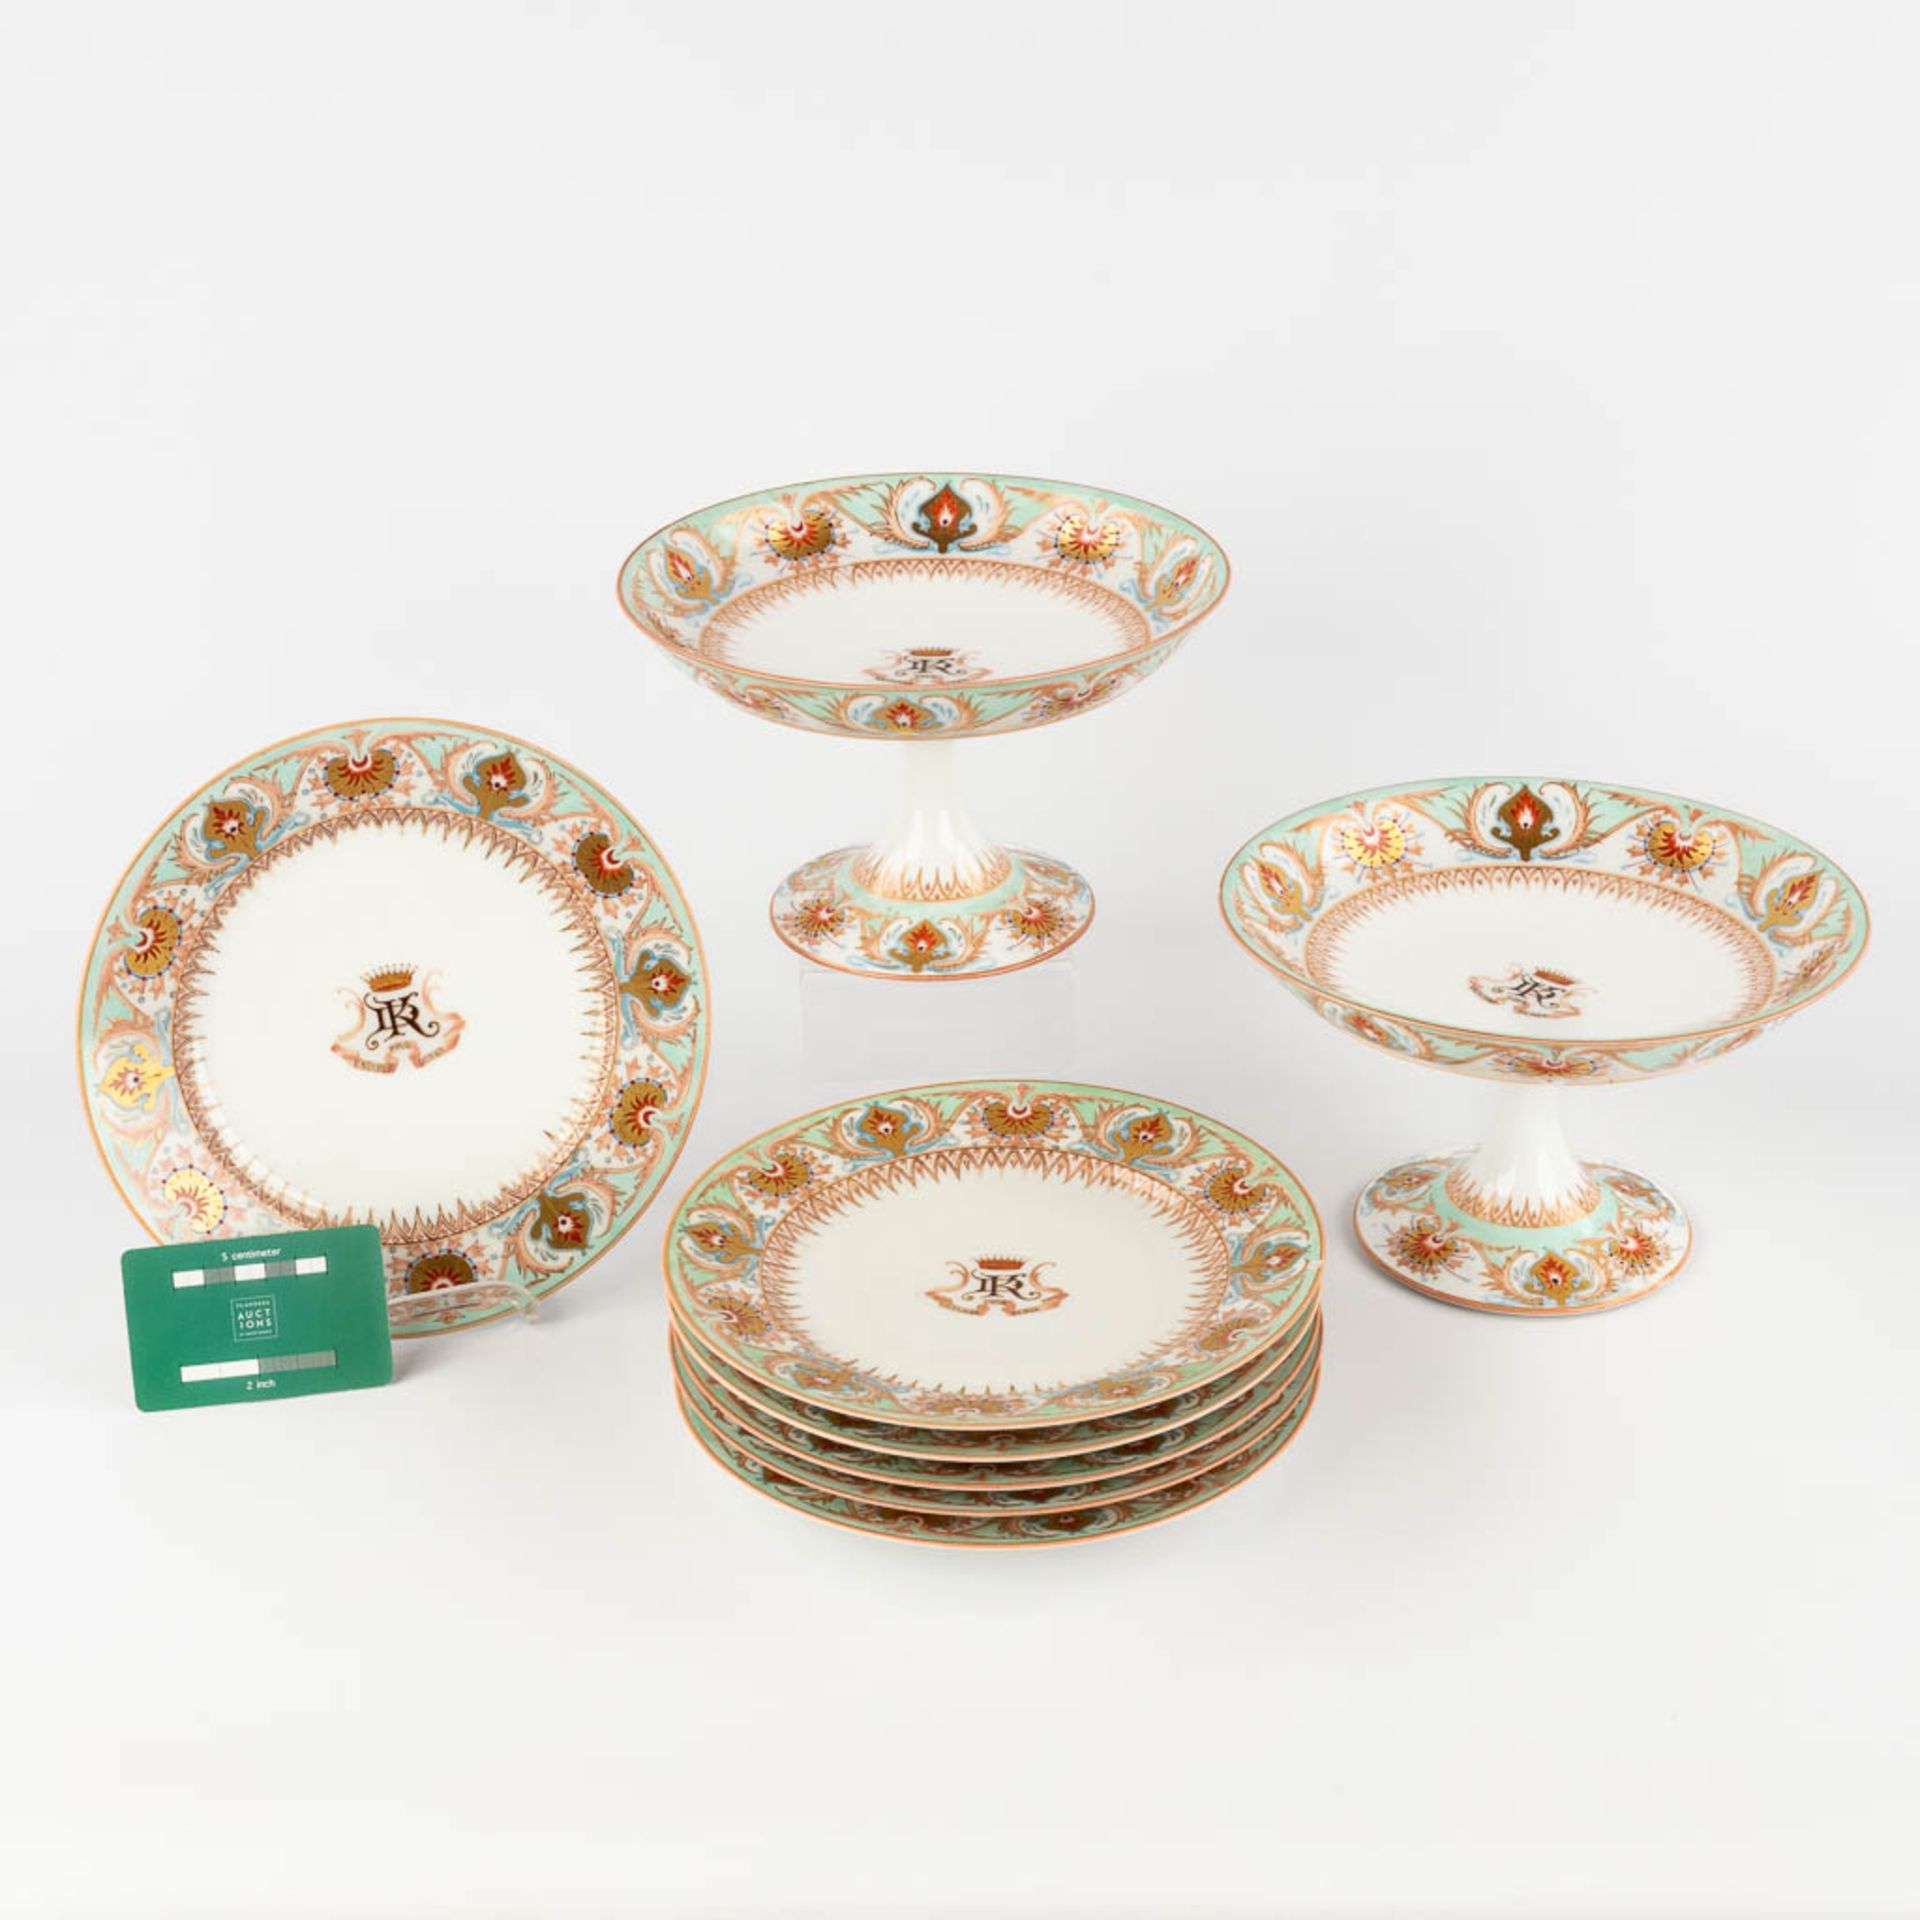 A set of 2 tazza and 6 plates, Count 'De Kerckhove', Brussel. 19th C. (H:13,5 x D:22,5 cm) - Image 2 of 15